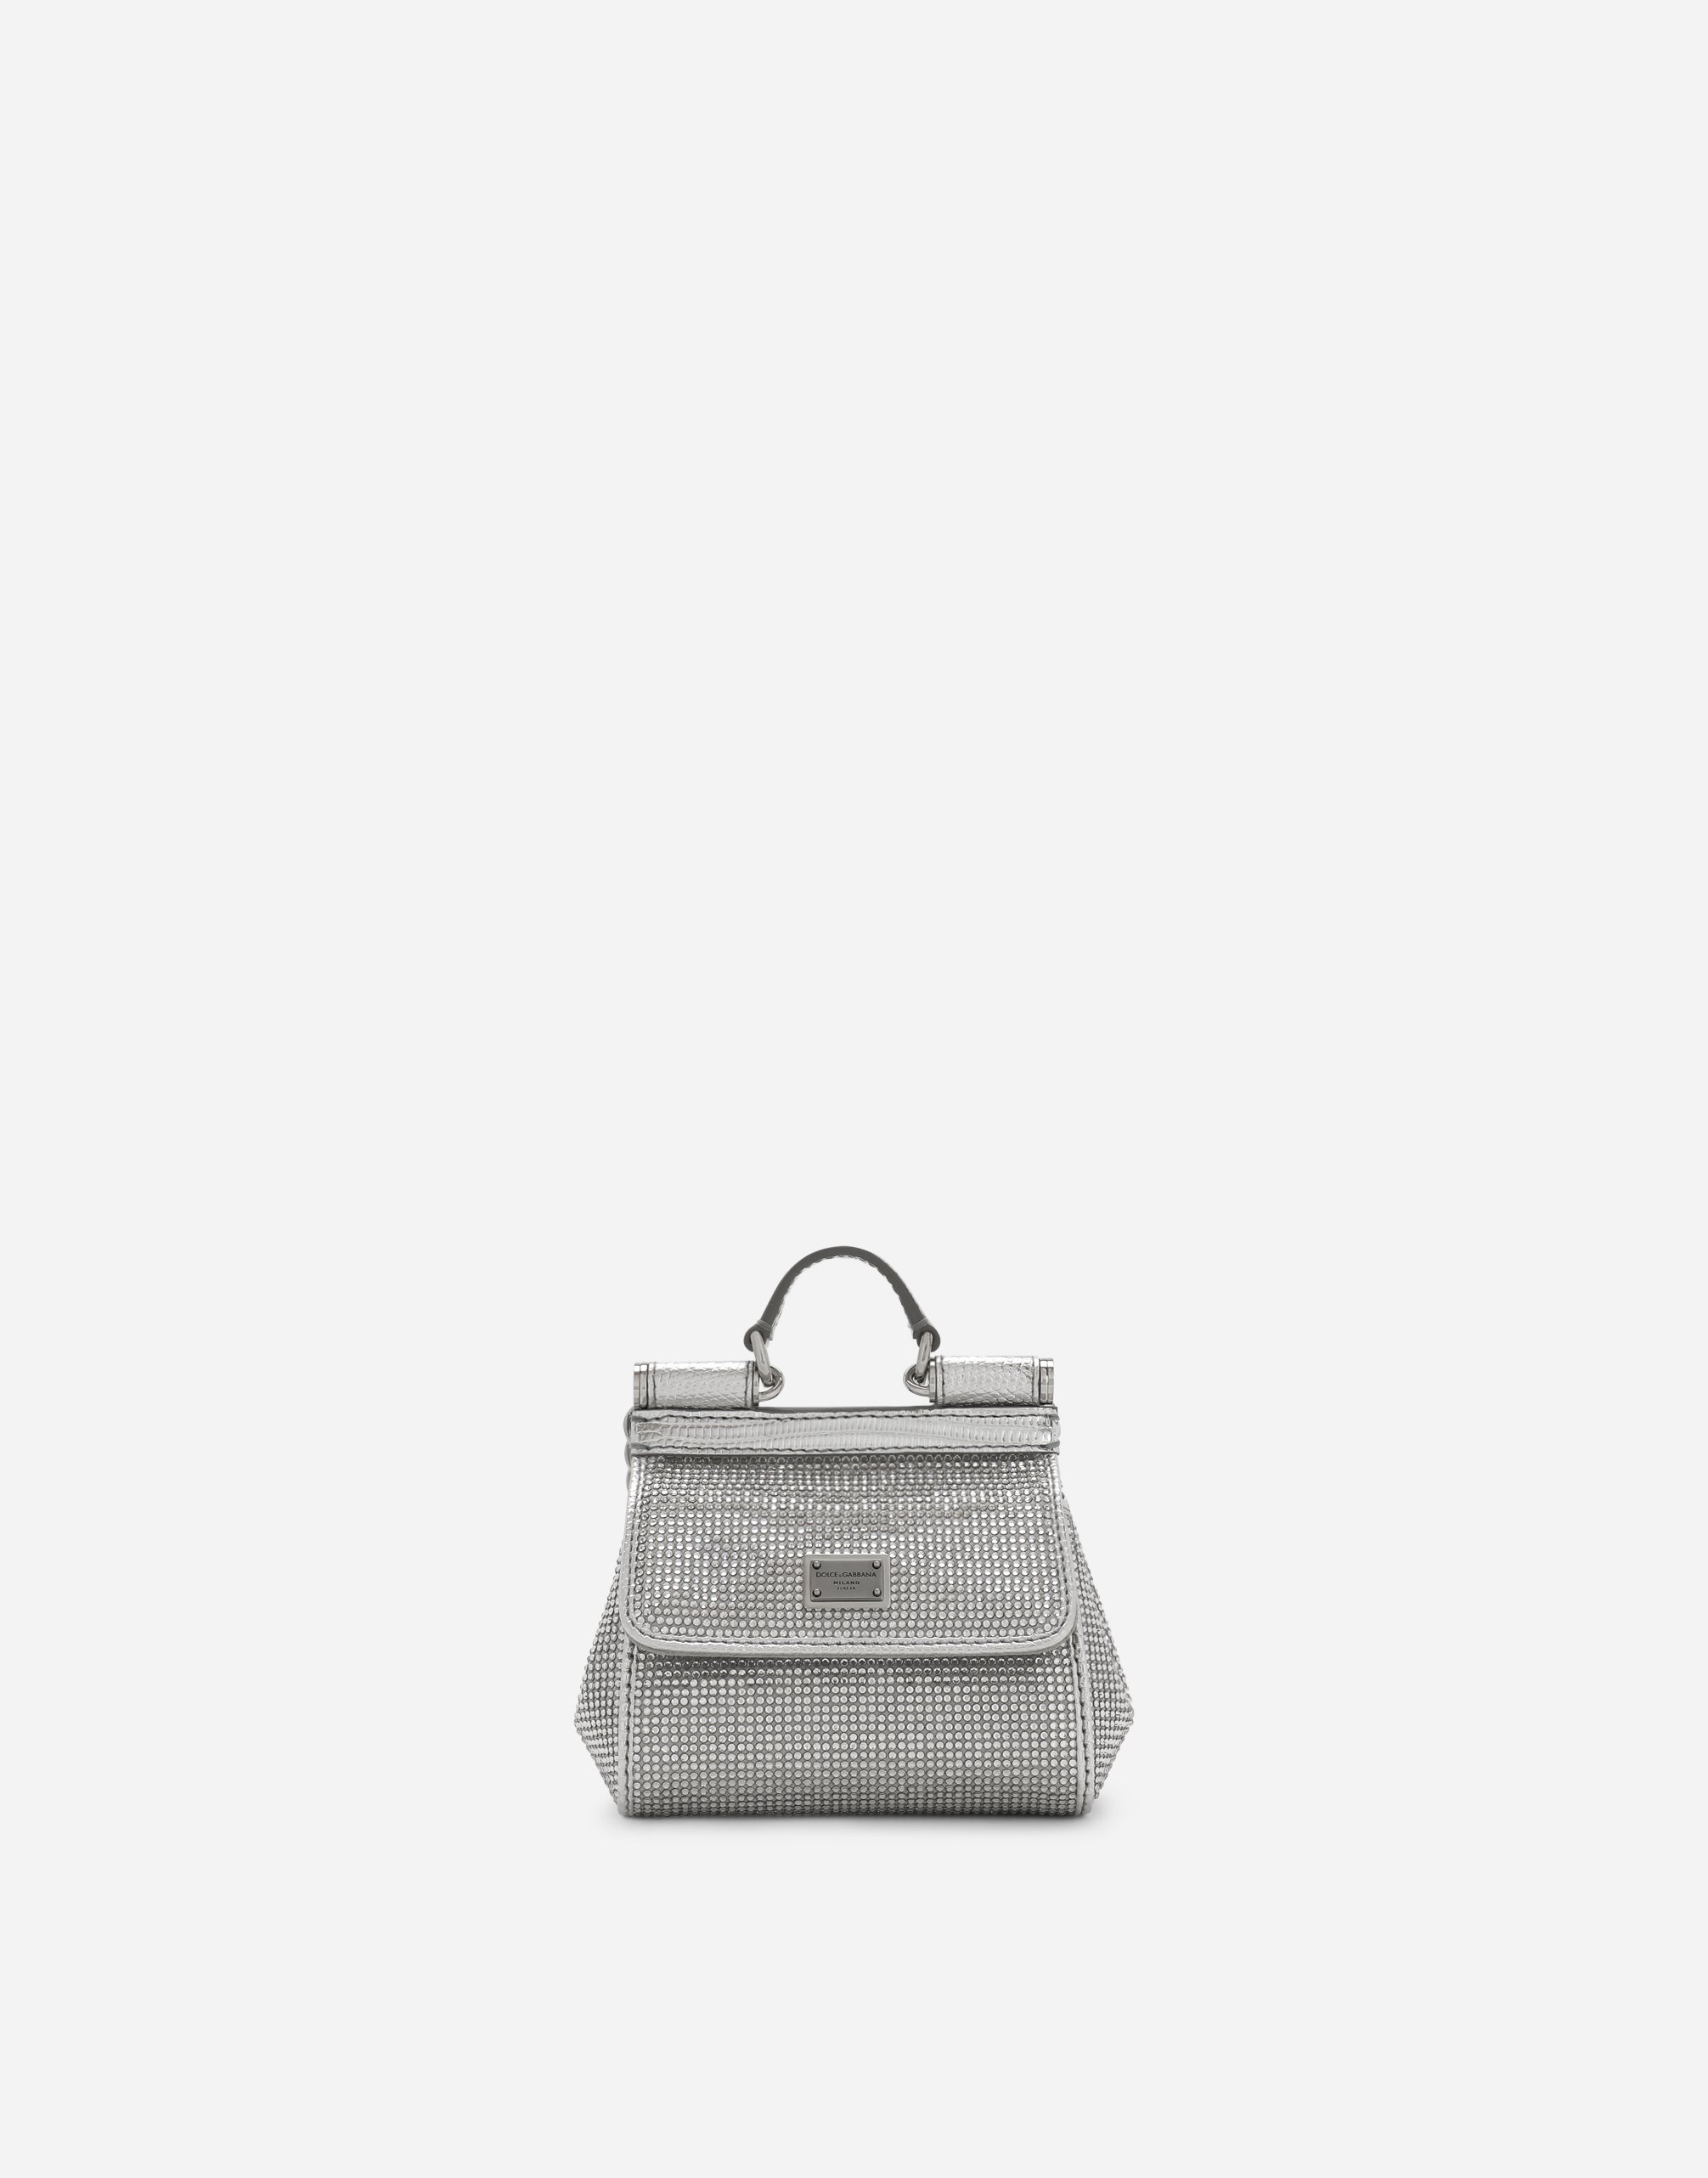 DOLCE & GABBANA Handbag SICILY SMALL in white